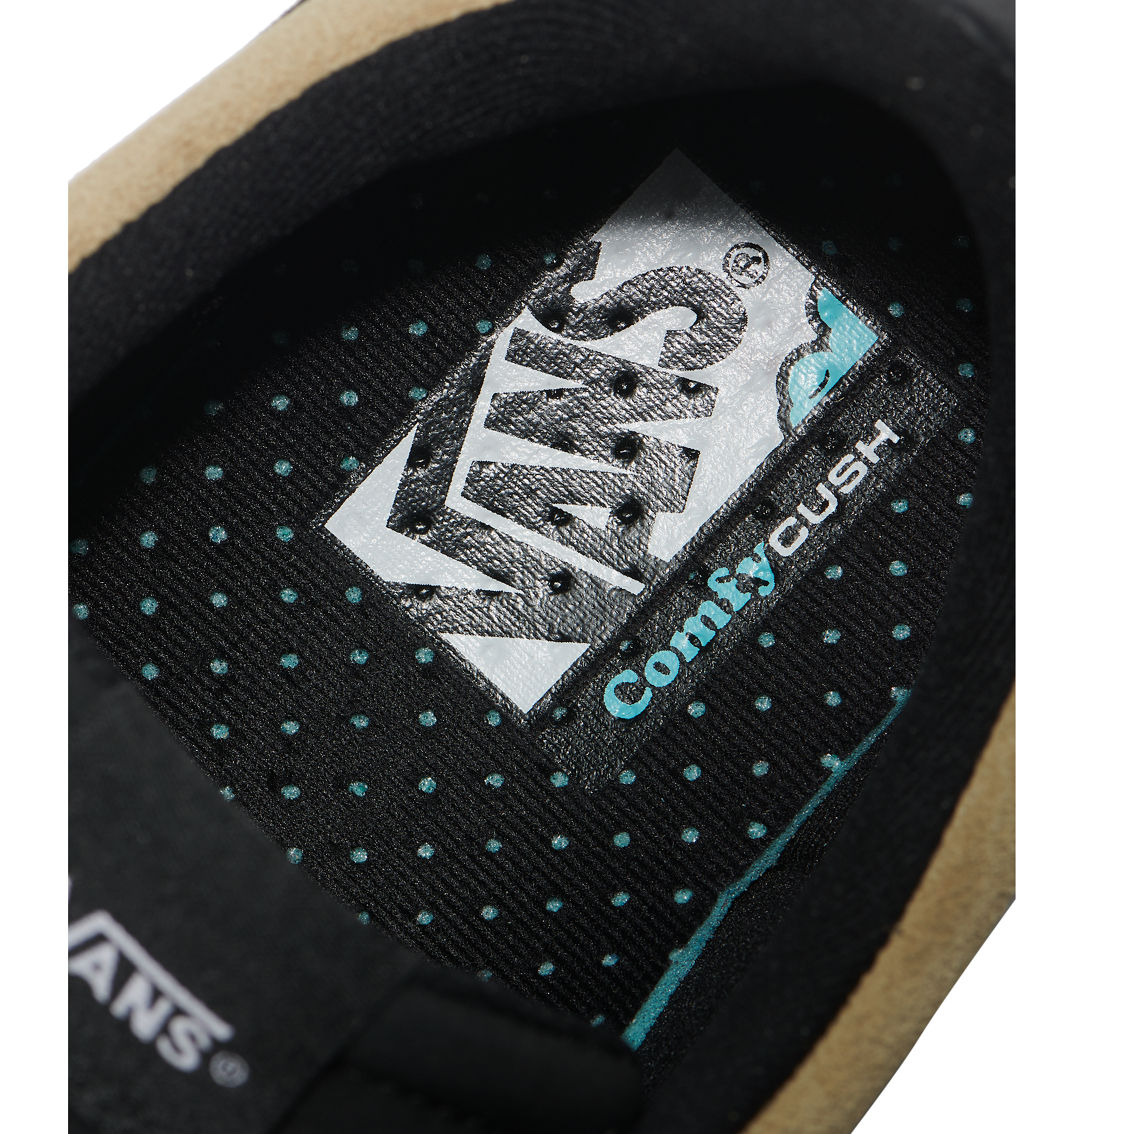 Vans Men's Cruze Too ComfyCush Black Outsole Shoes - Image 5 of 5